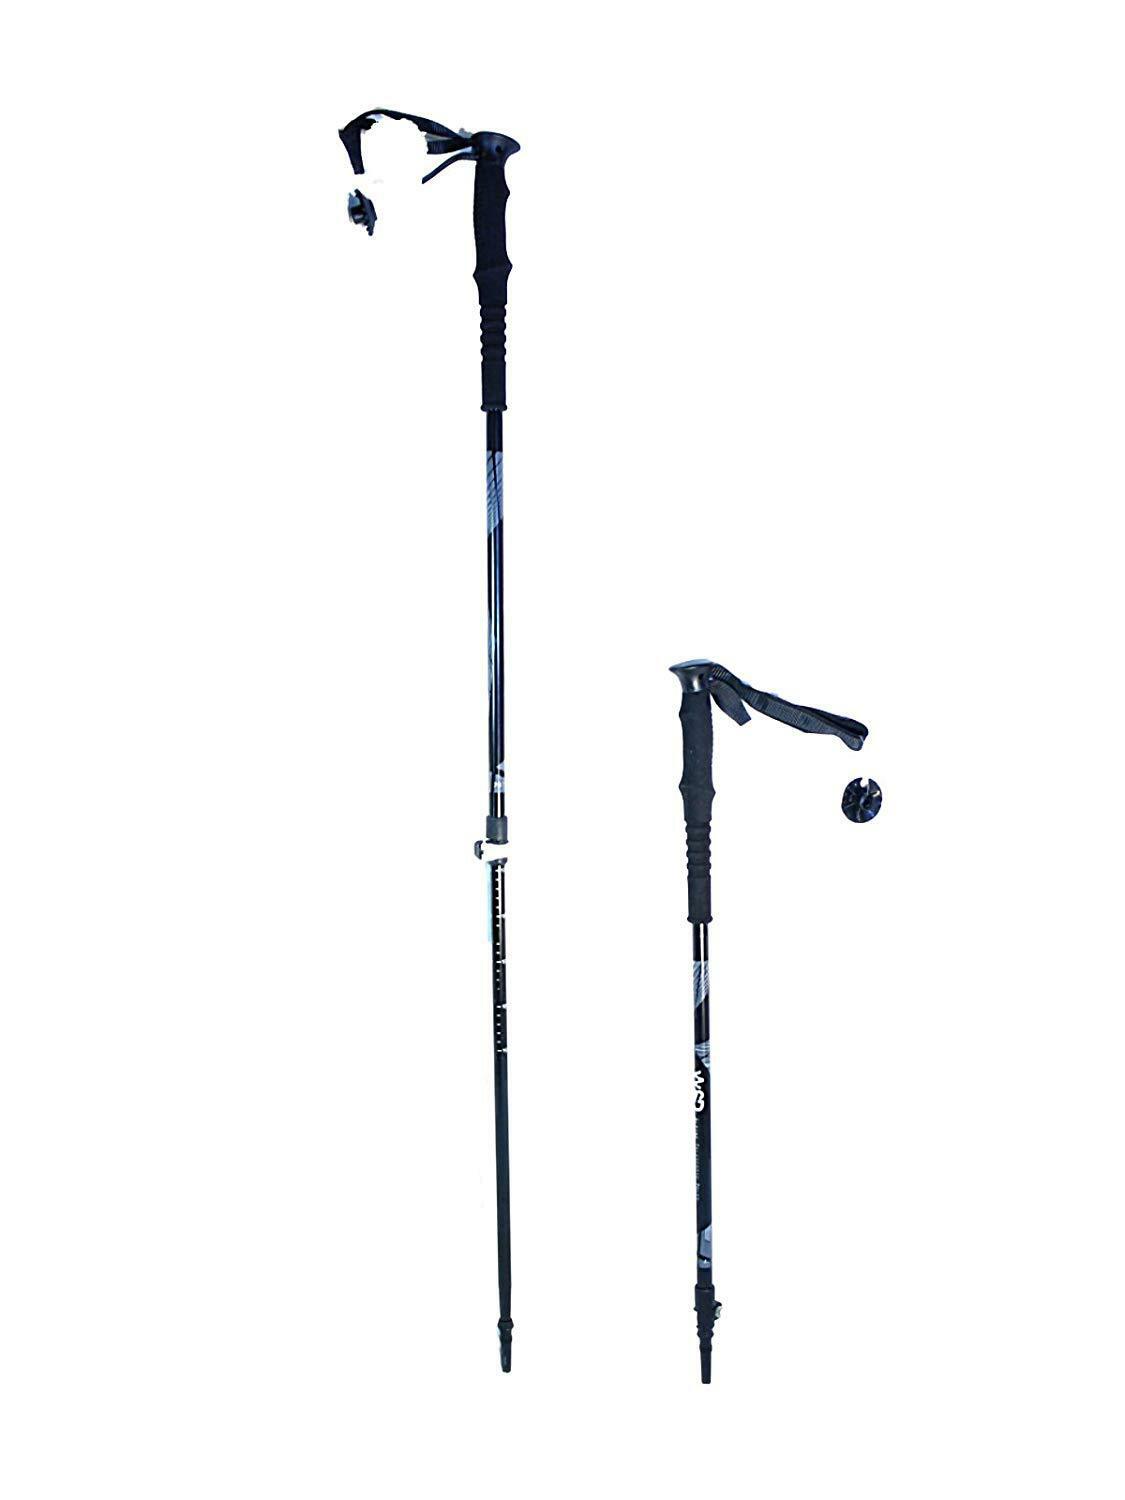 Telescopic Adjustable Ski Poles Adult Ski 115cm -135cm (45" To 53") 2019 Model